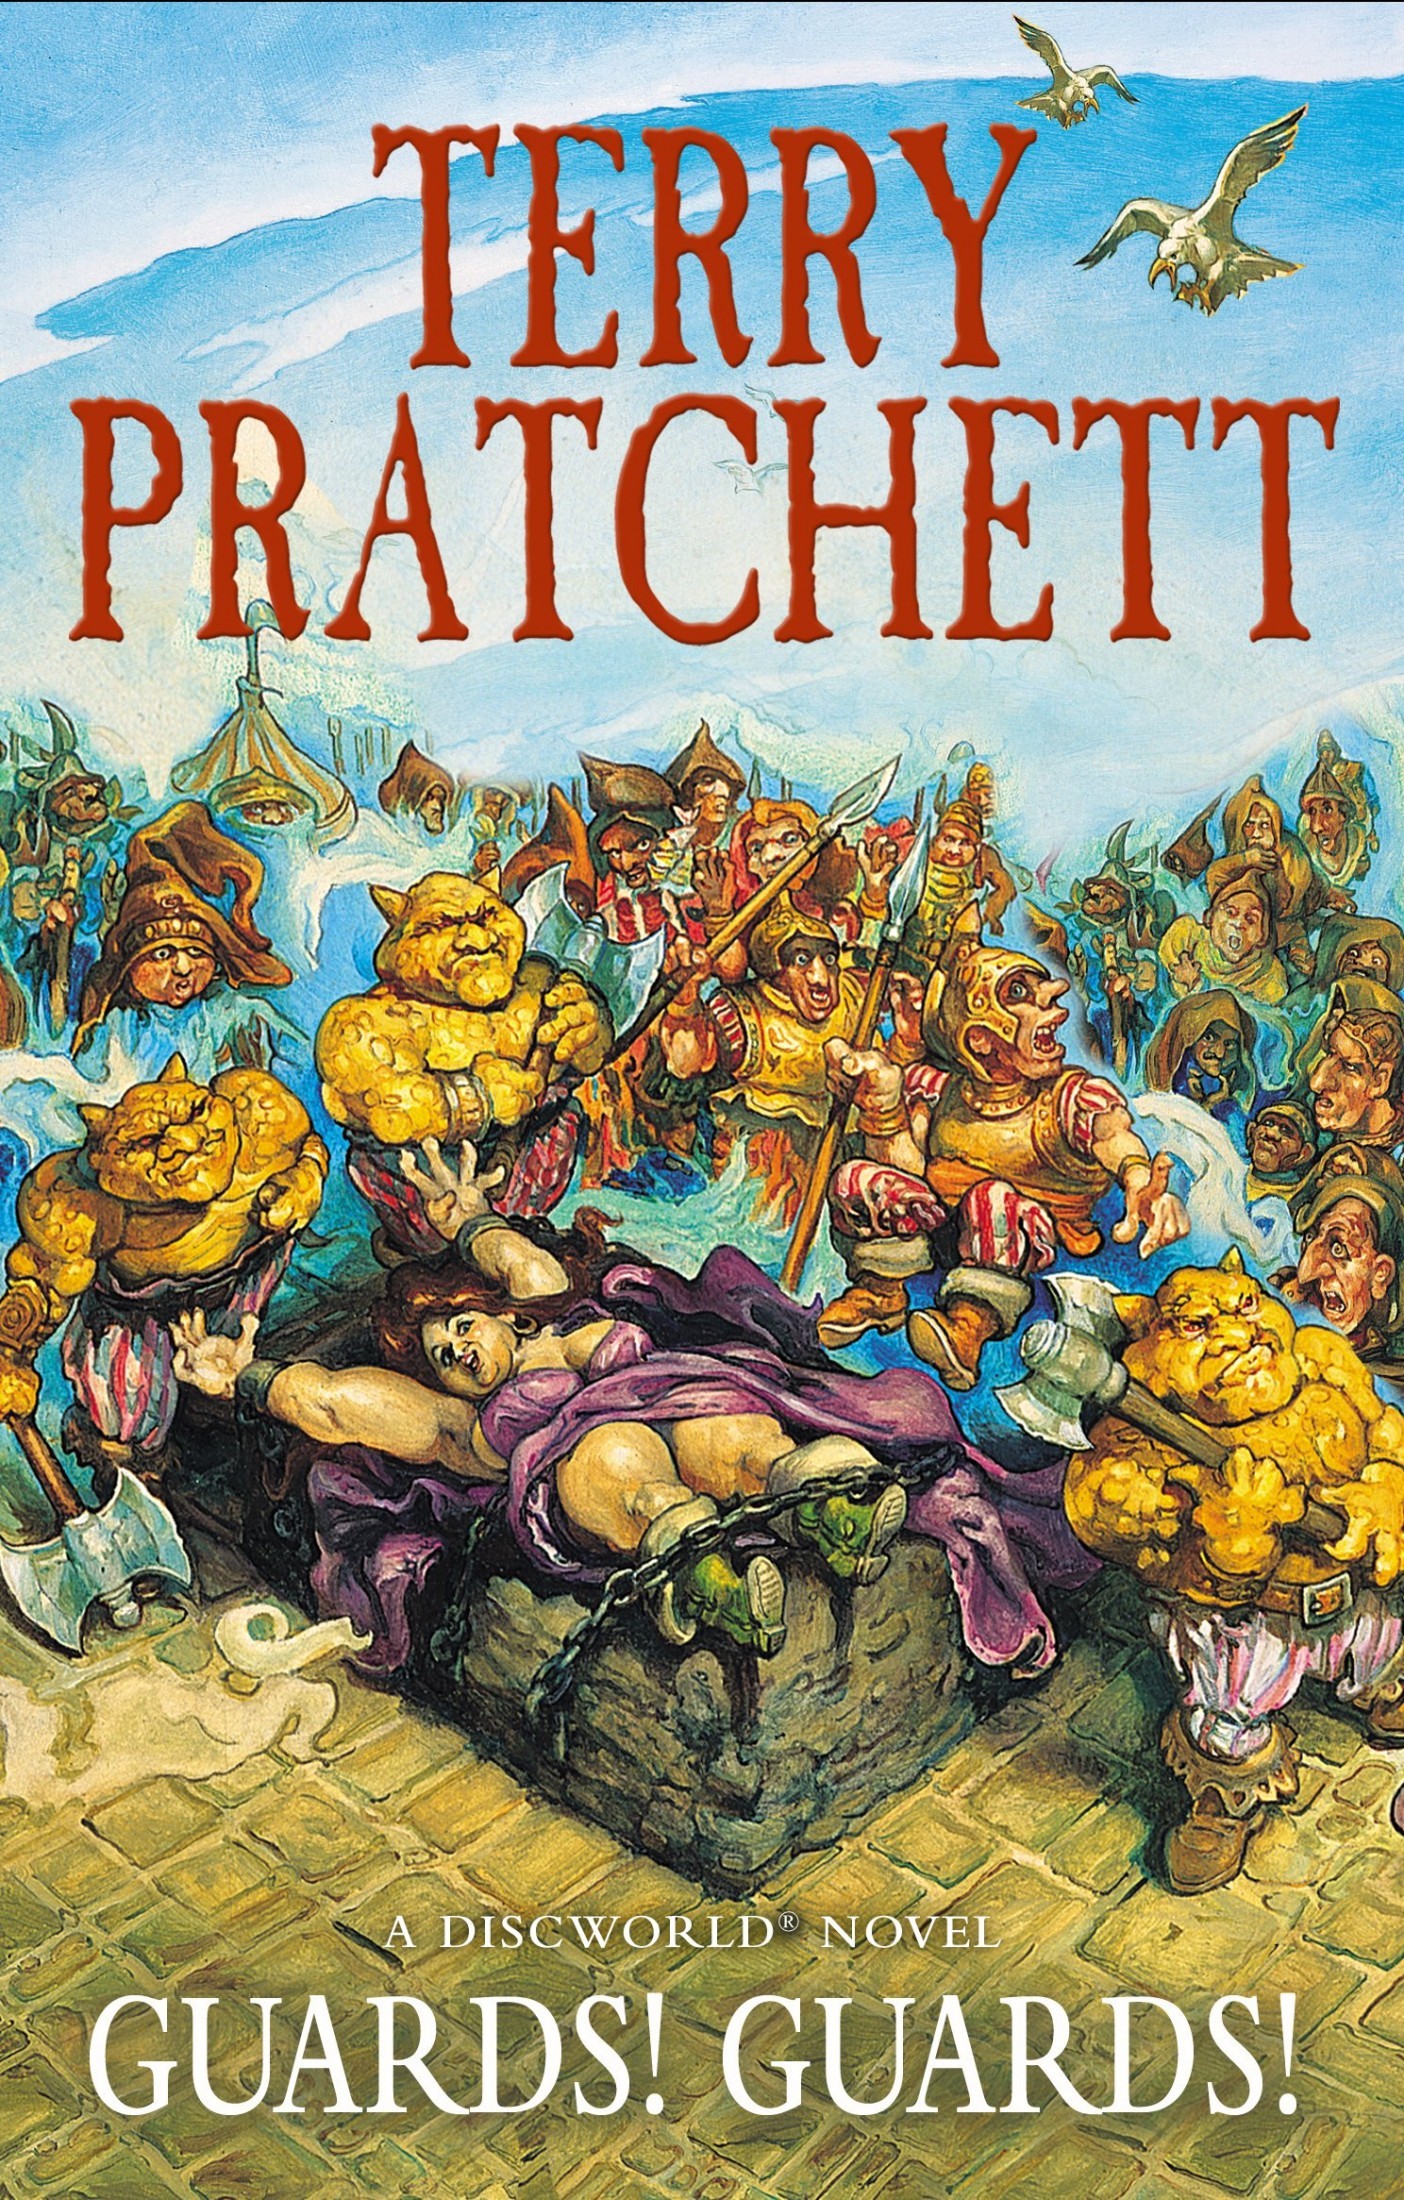 Terry Pratchett: Guards! Guards! (EBook, 2007, HarperCollins)